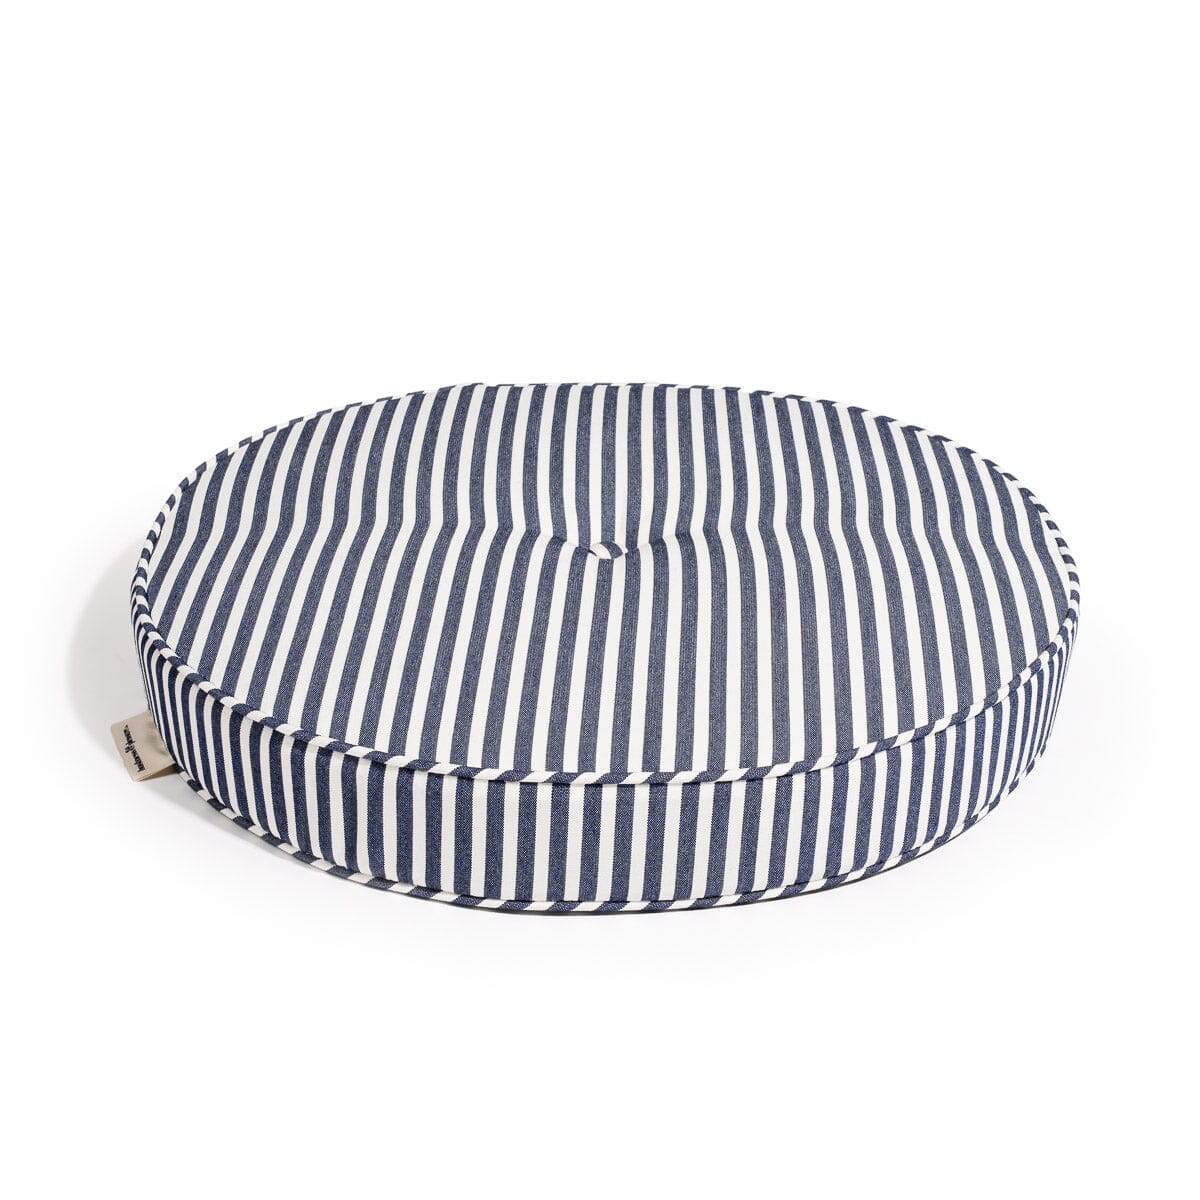 The Circular Pillow - Laurens Navy Stripe Circular Pillow Business & Pleasure Co 